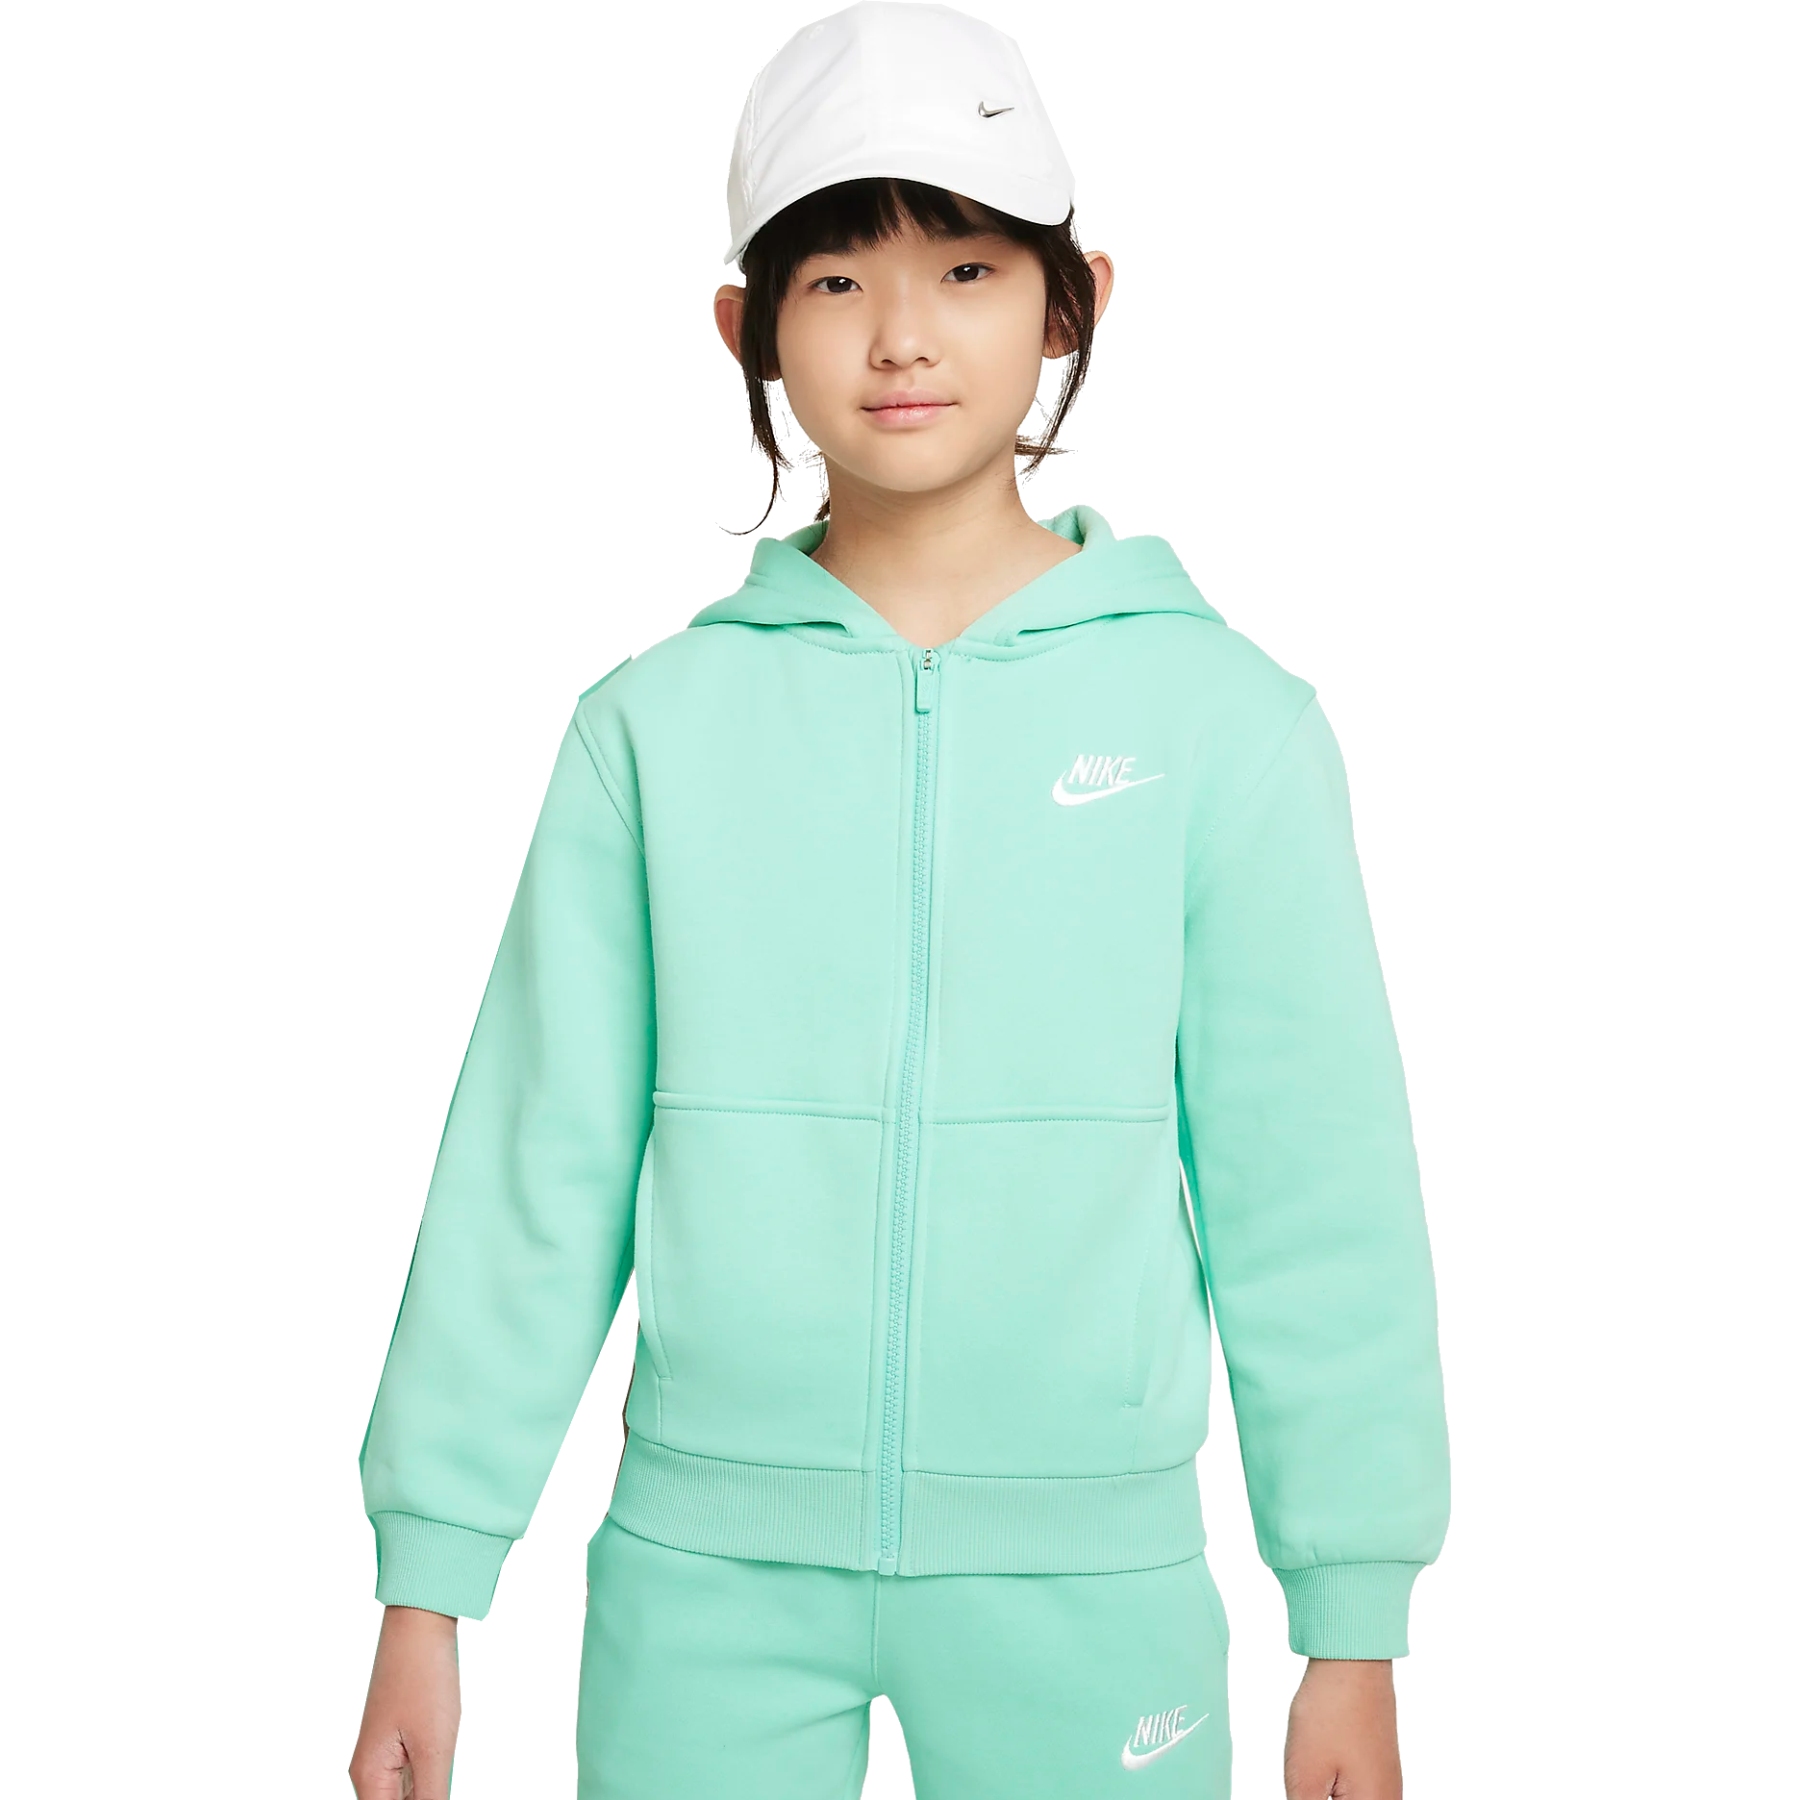 Produktbild von Nike Sportswear Club Fleece Kapuzenjacke Kinder - emerald rise/white FD3004-349